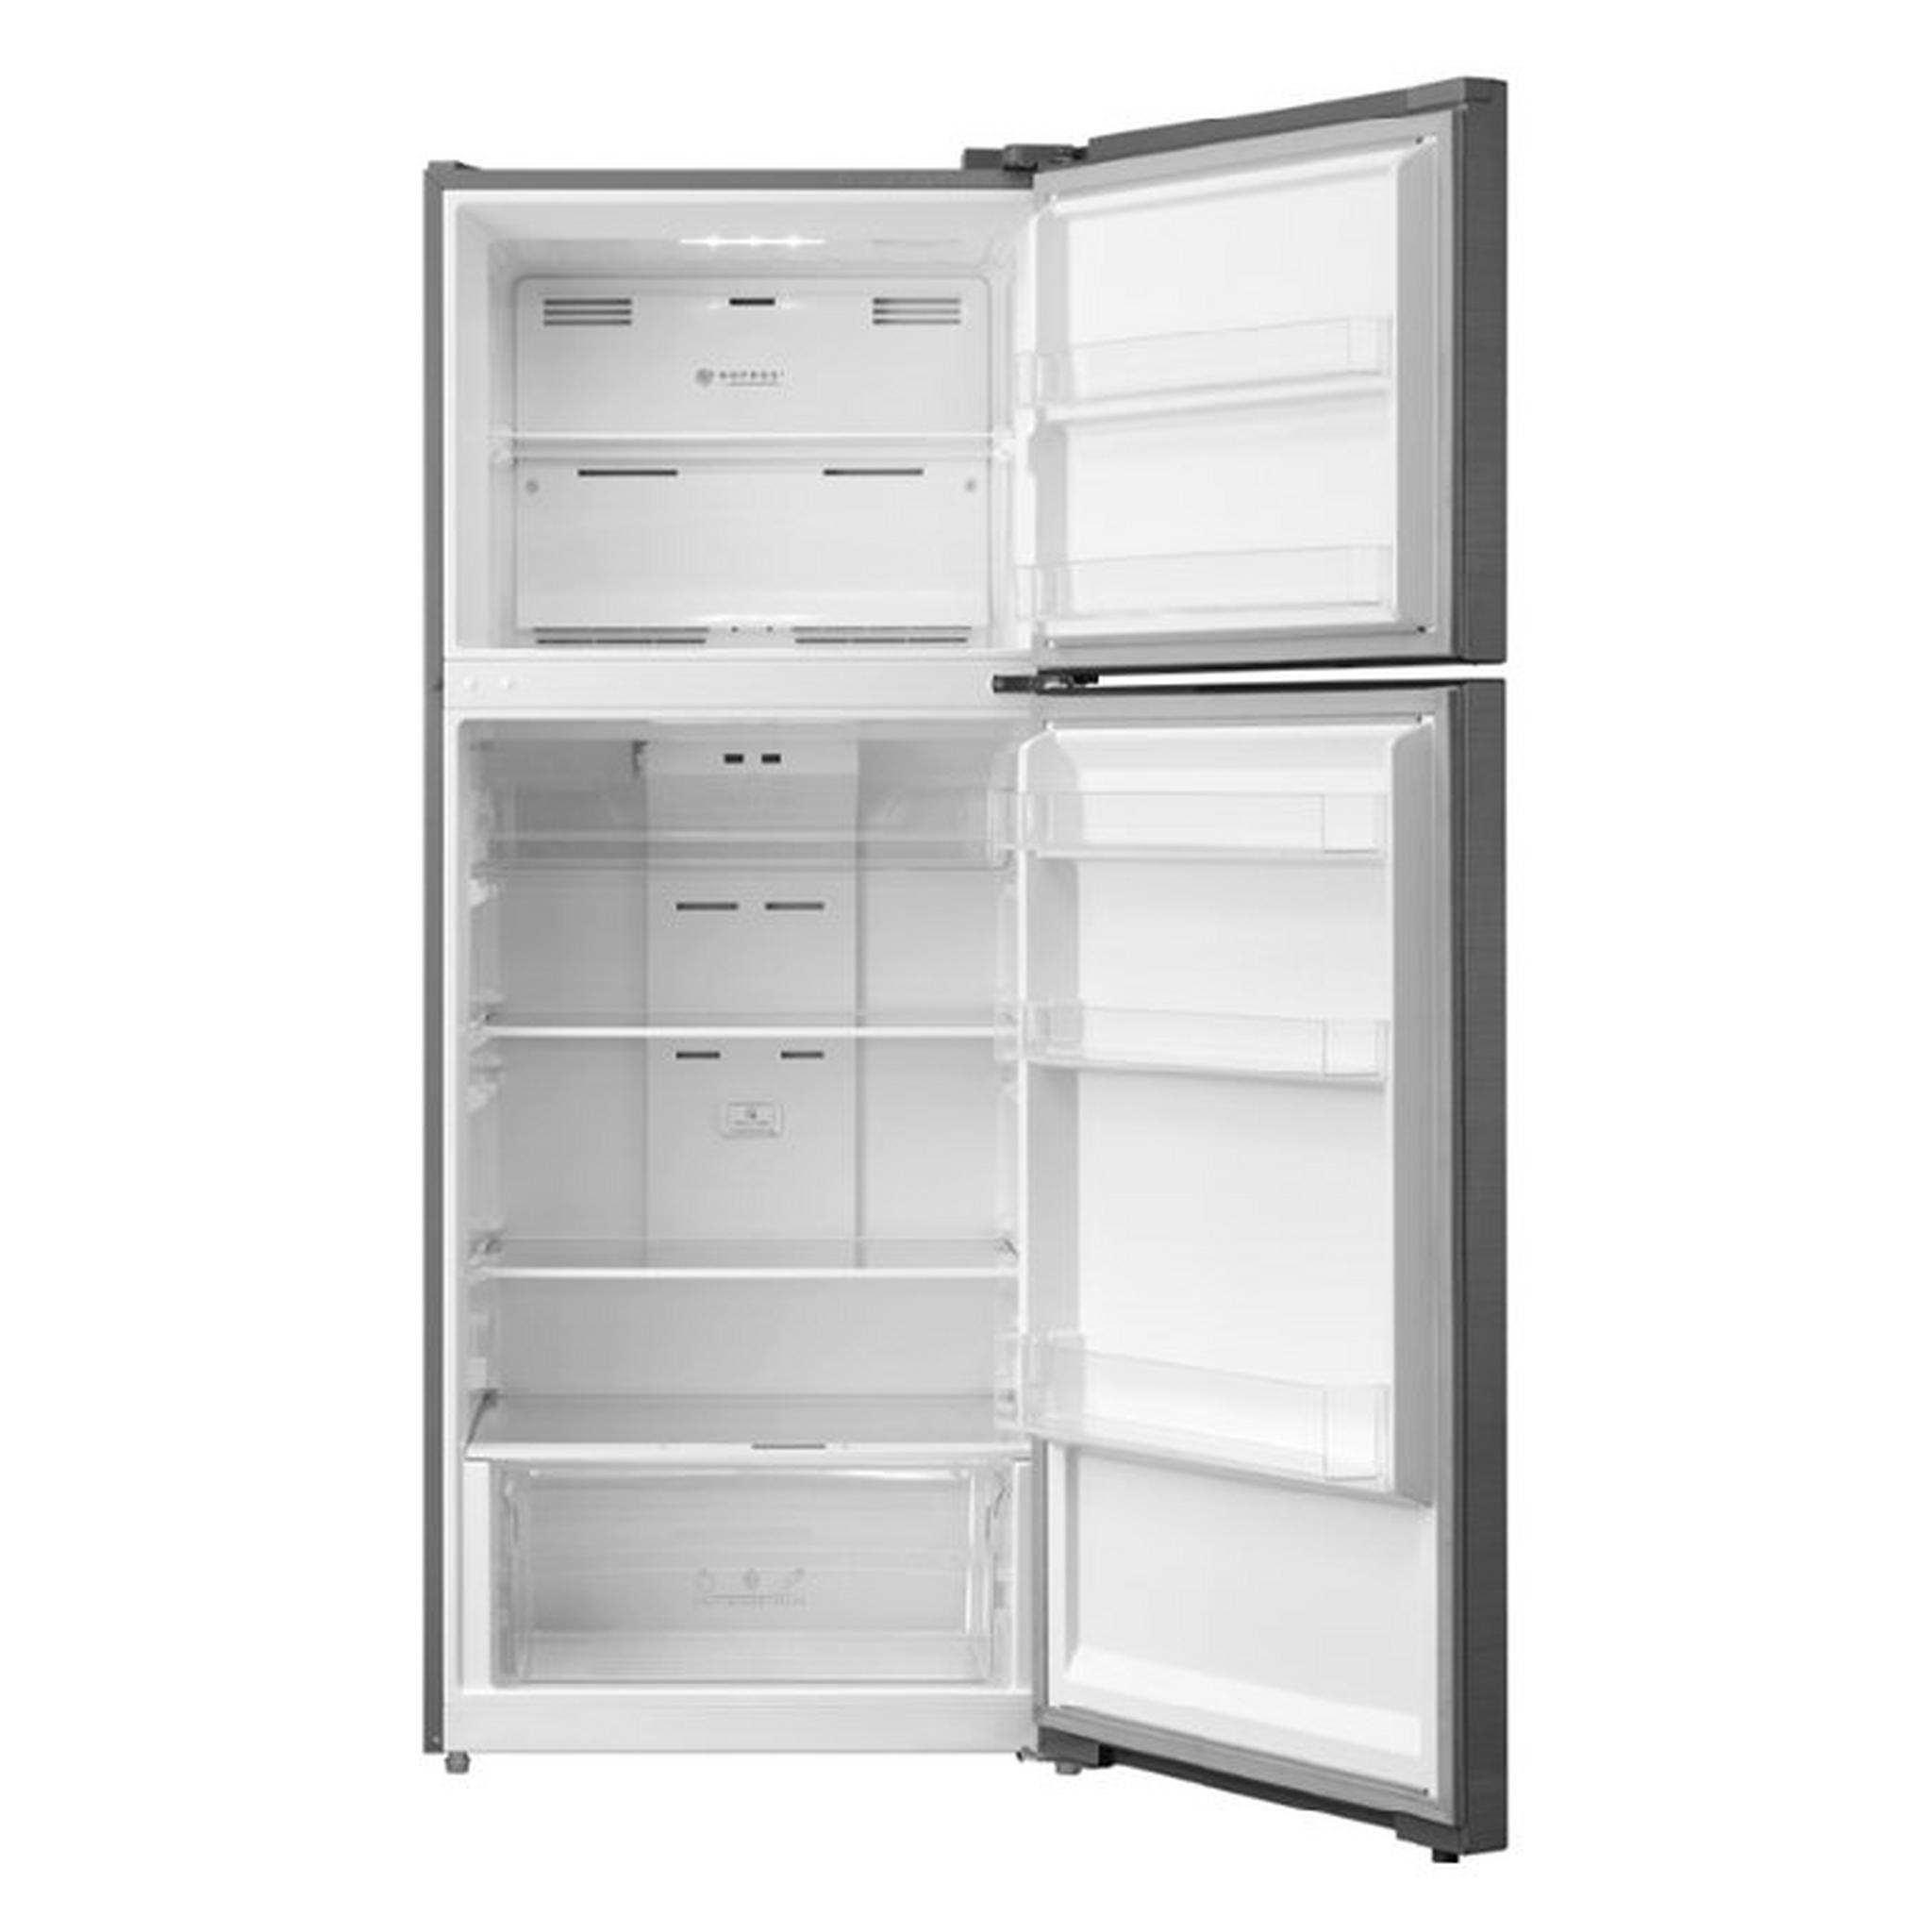 WANSA Top Mount Refrigerator, 19.7CFT, 559-Liters, WRTG559NFSC62 - Inox